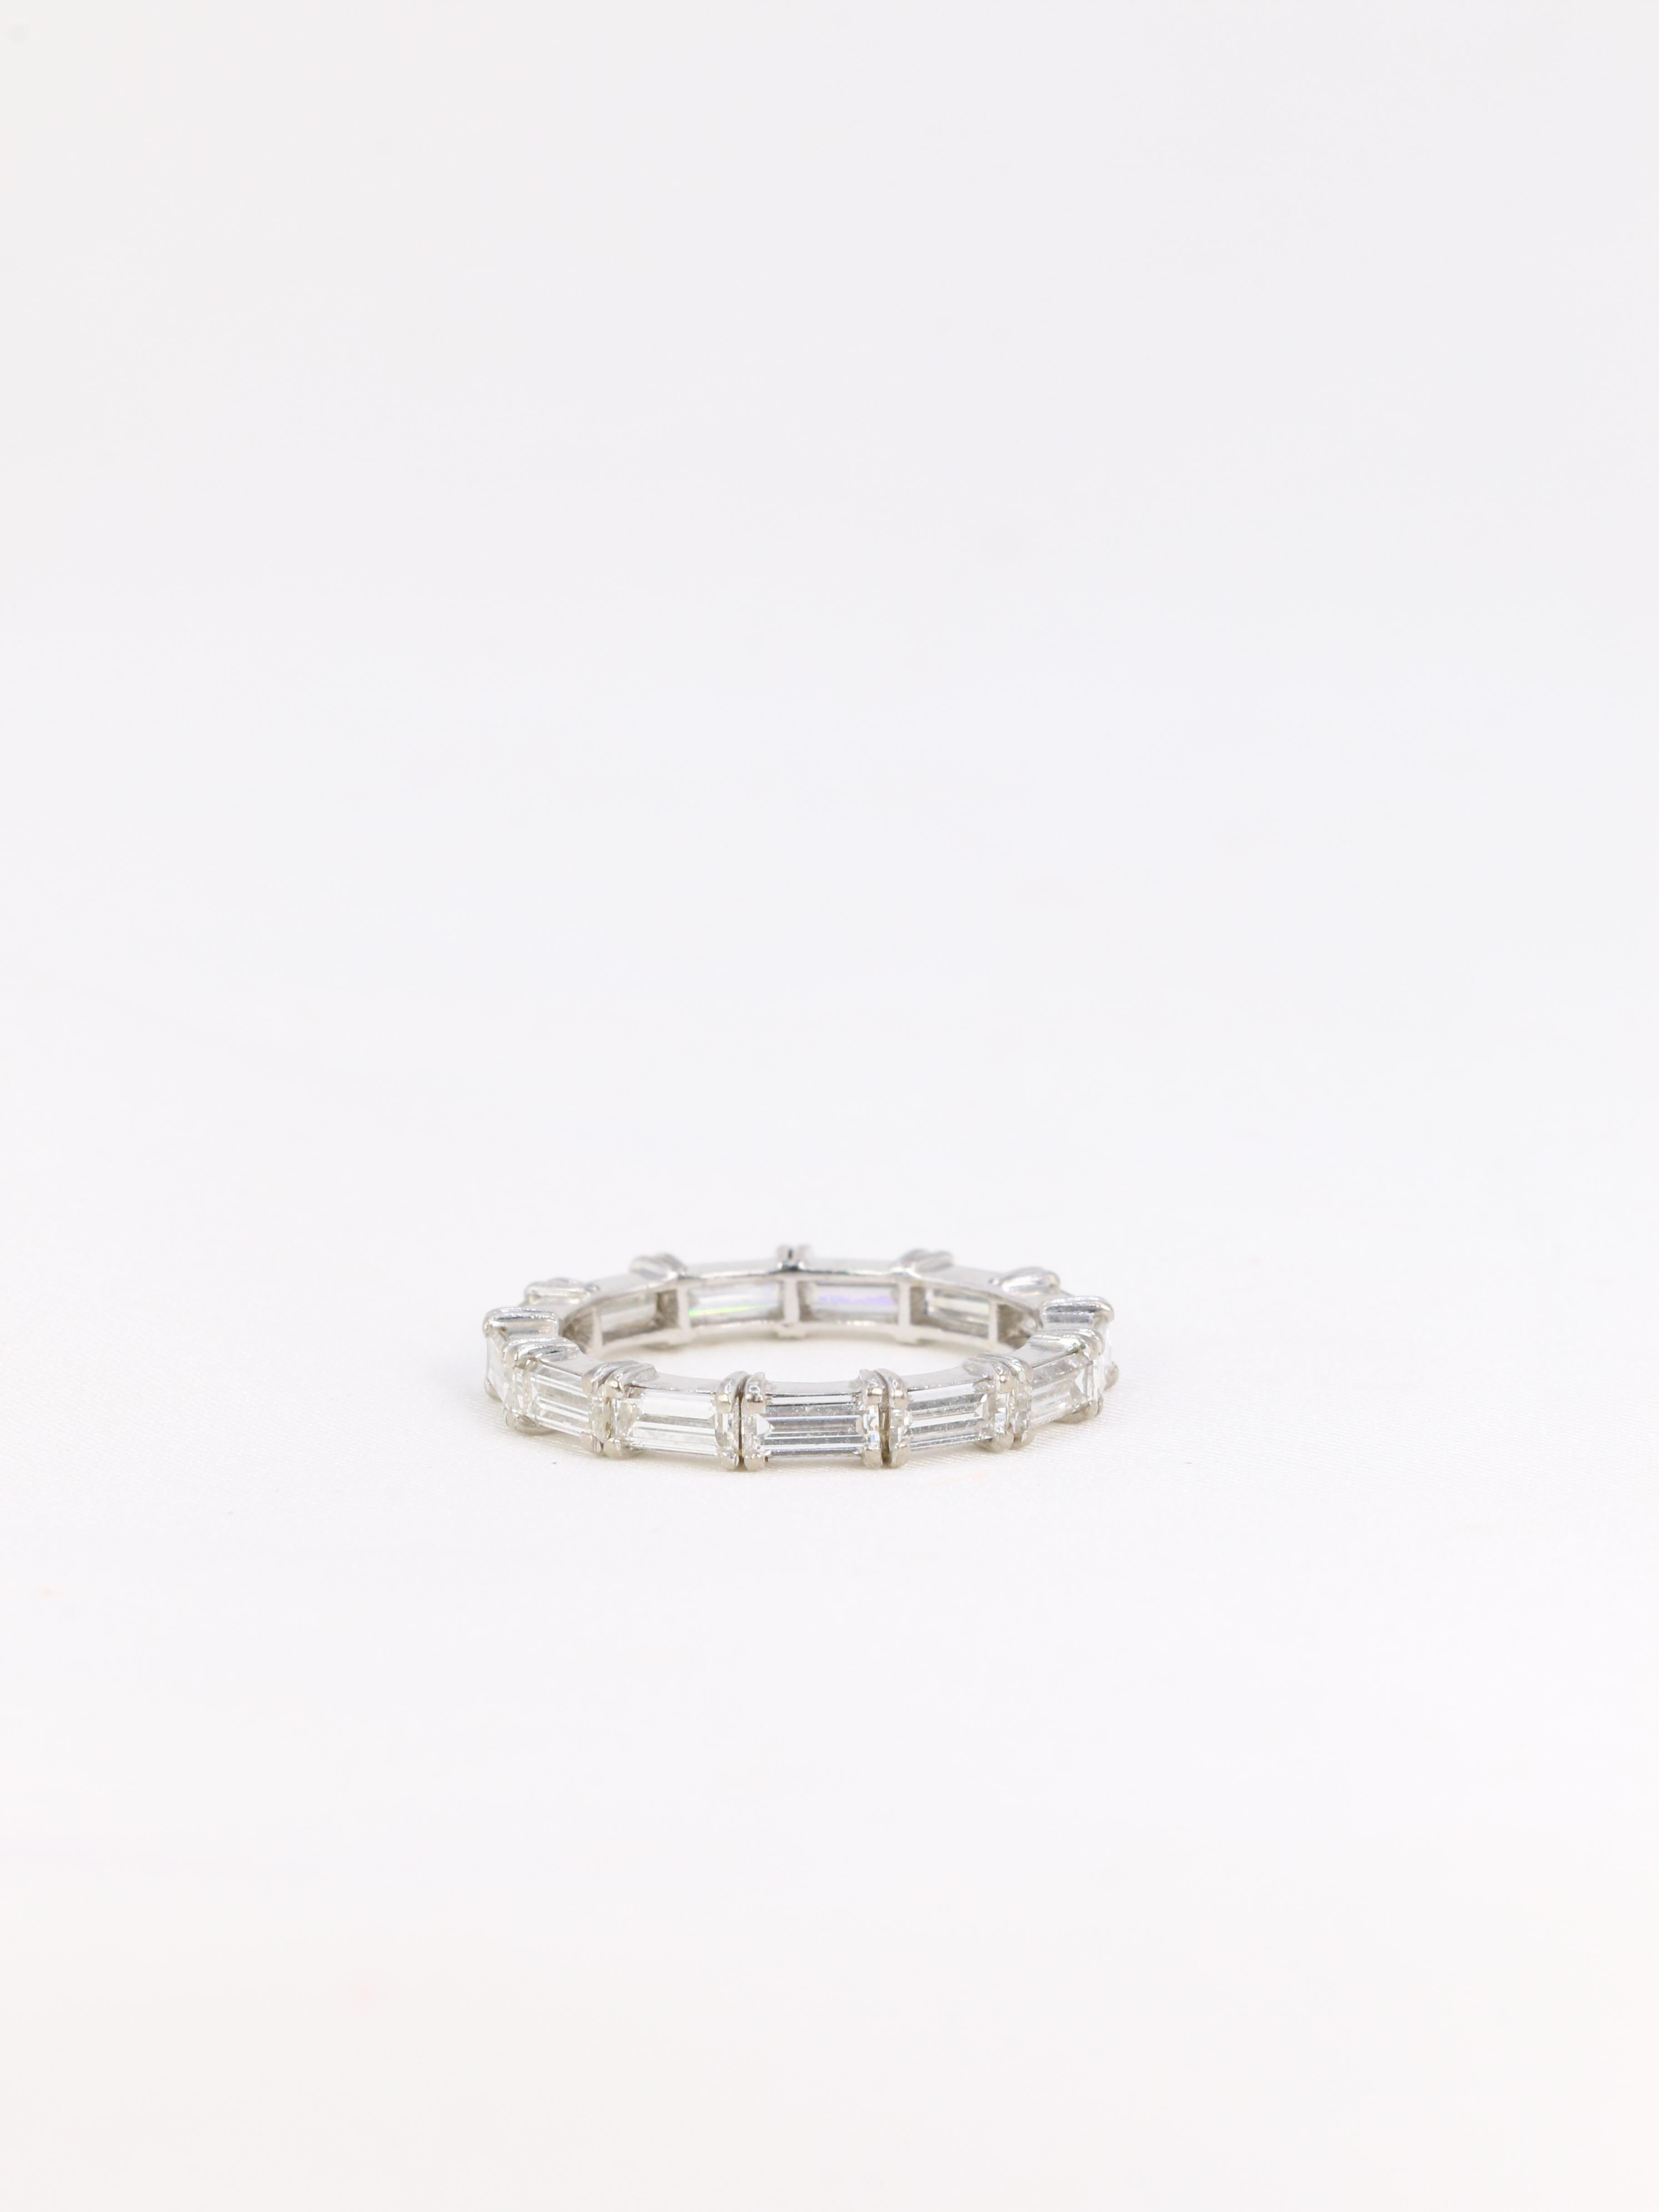 Women's Vintage white gold eternity ring set with 2ct baguette-cut diamonds